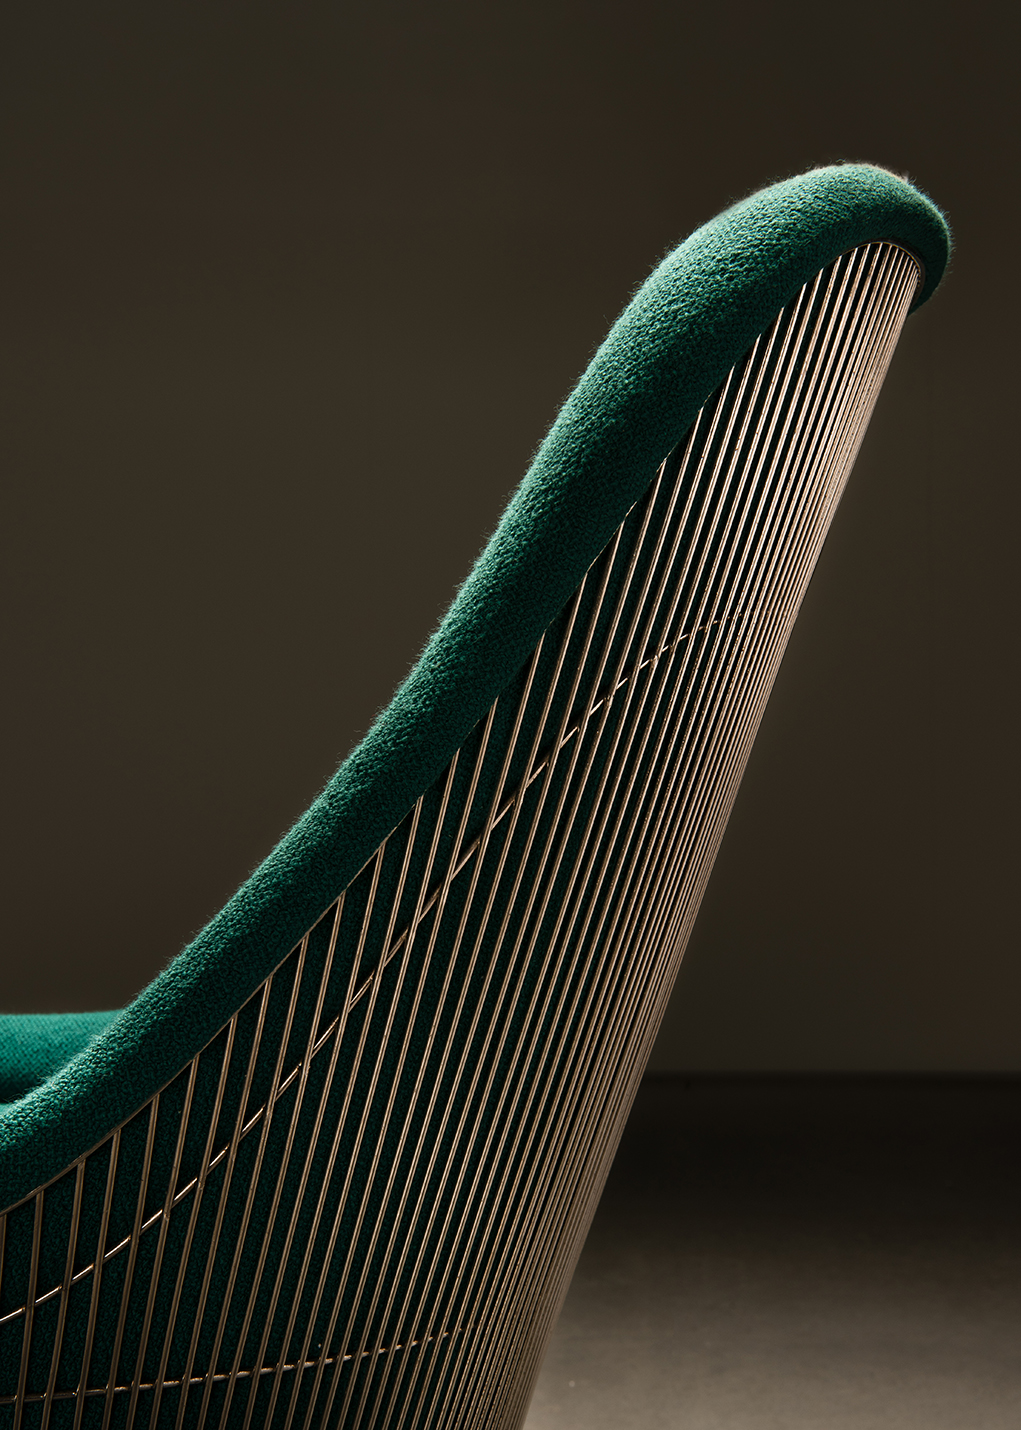 green-chair2